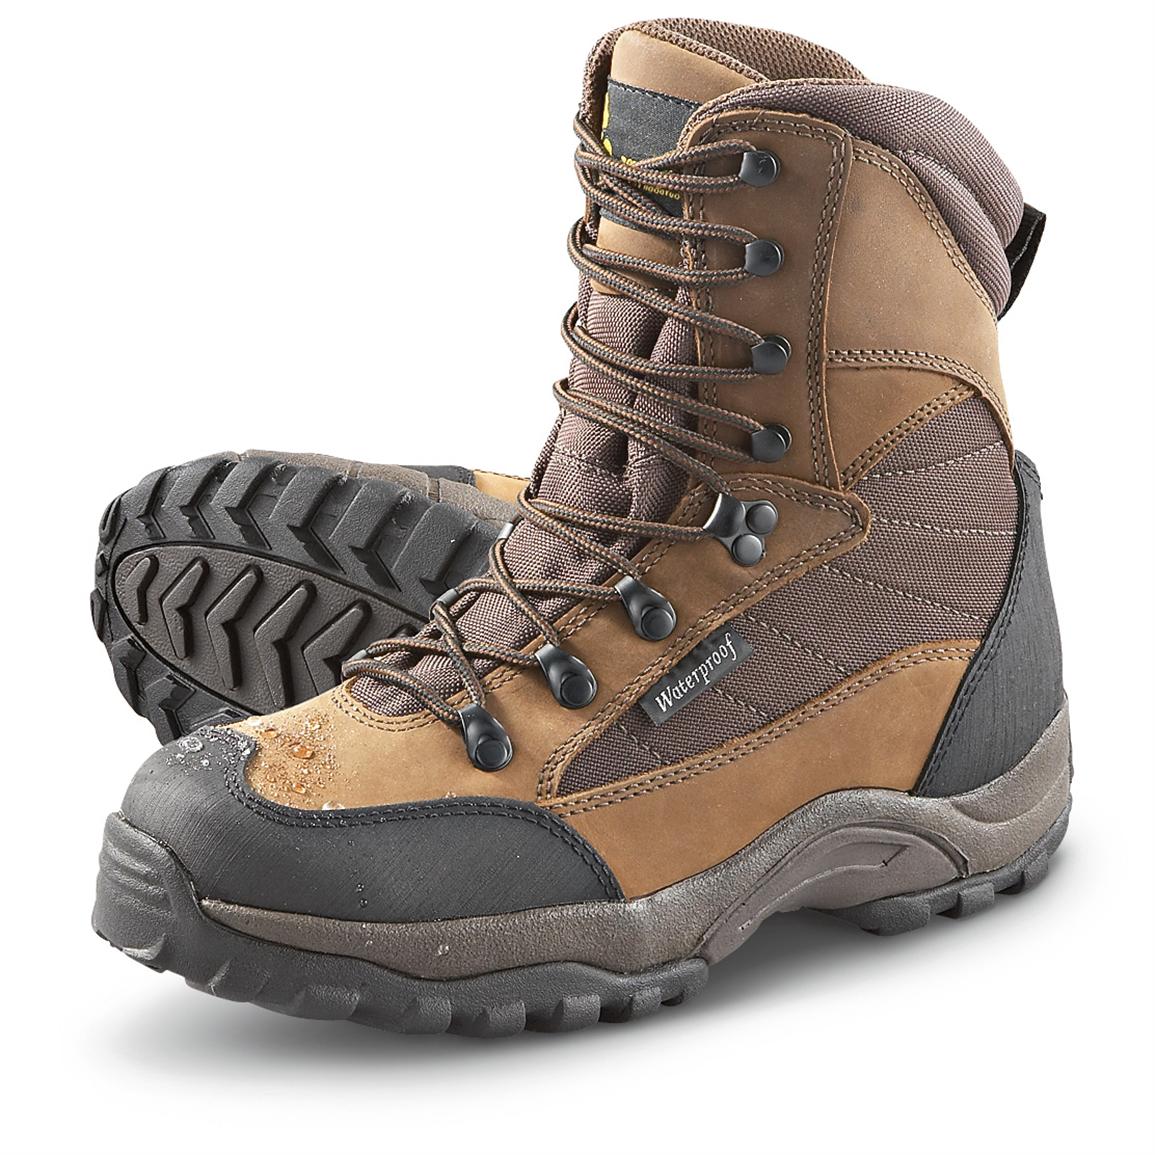 Golden Retriever™ Waterproof Hunting Boots, Brown - 158033, Hunting ...